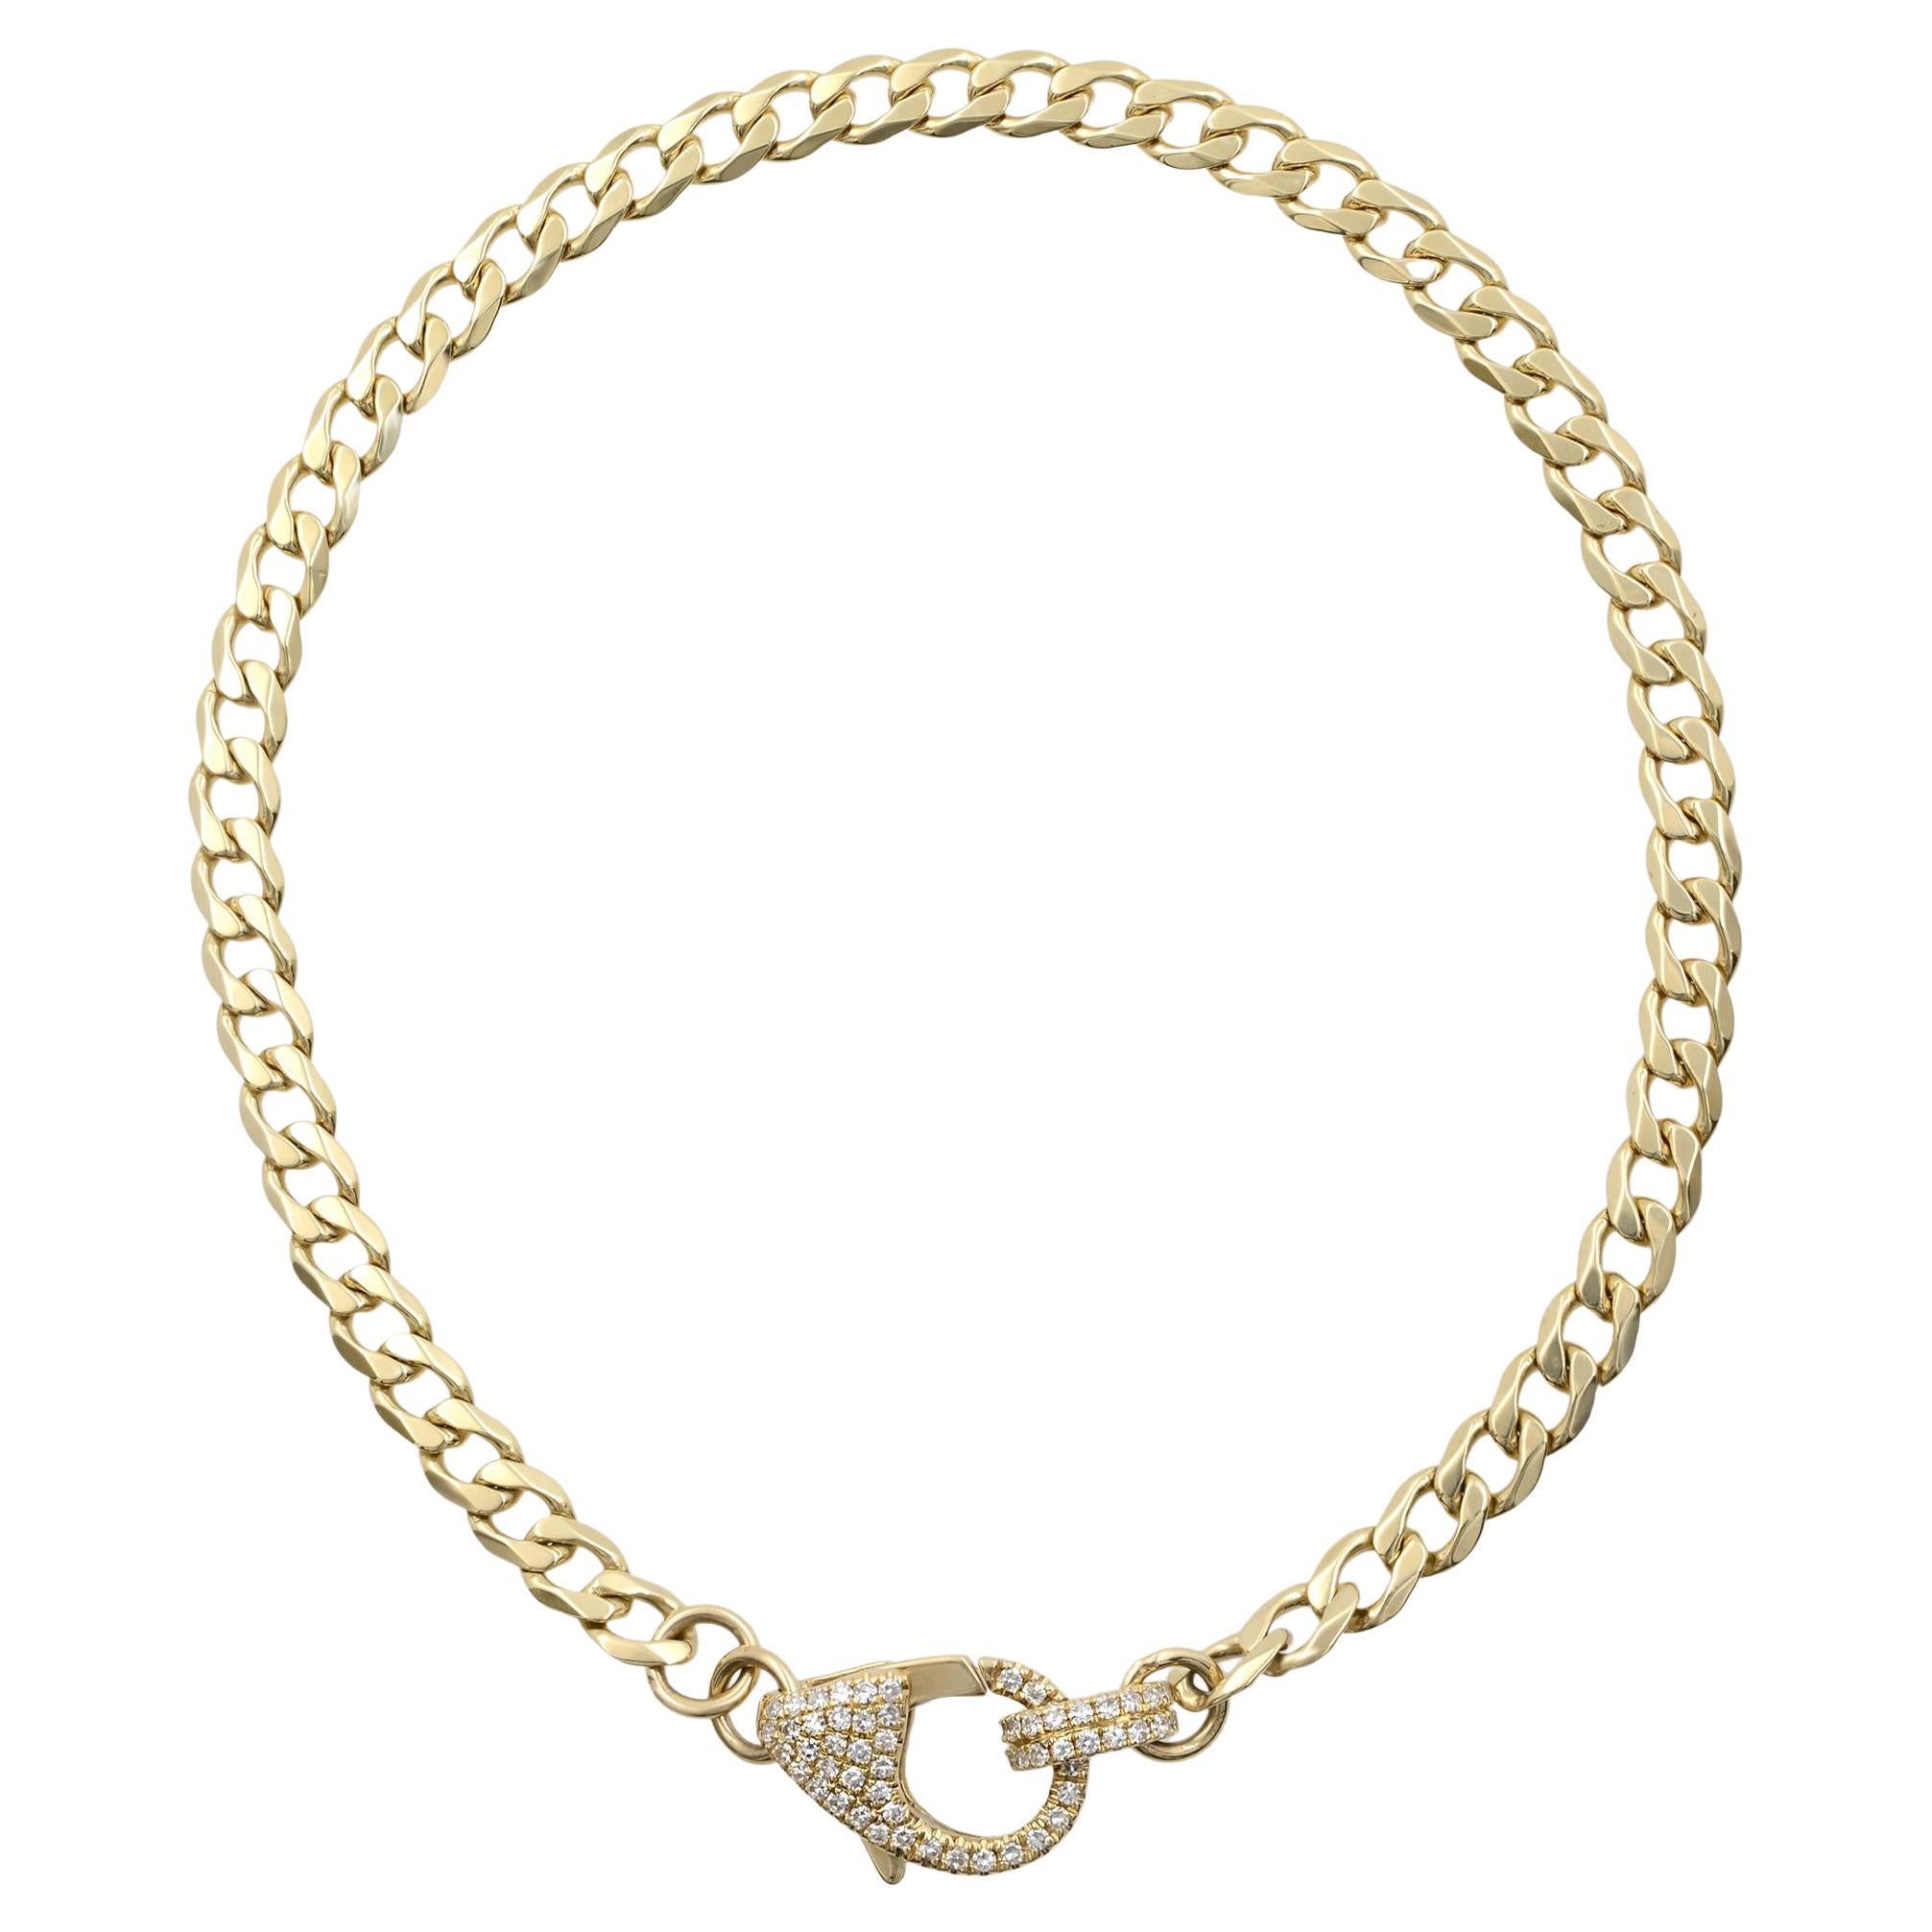 Rachel Koen Diamond Link Chain Bracelet 14K Yellow Gold 0.25Cttw 7 Inches For Sale